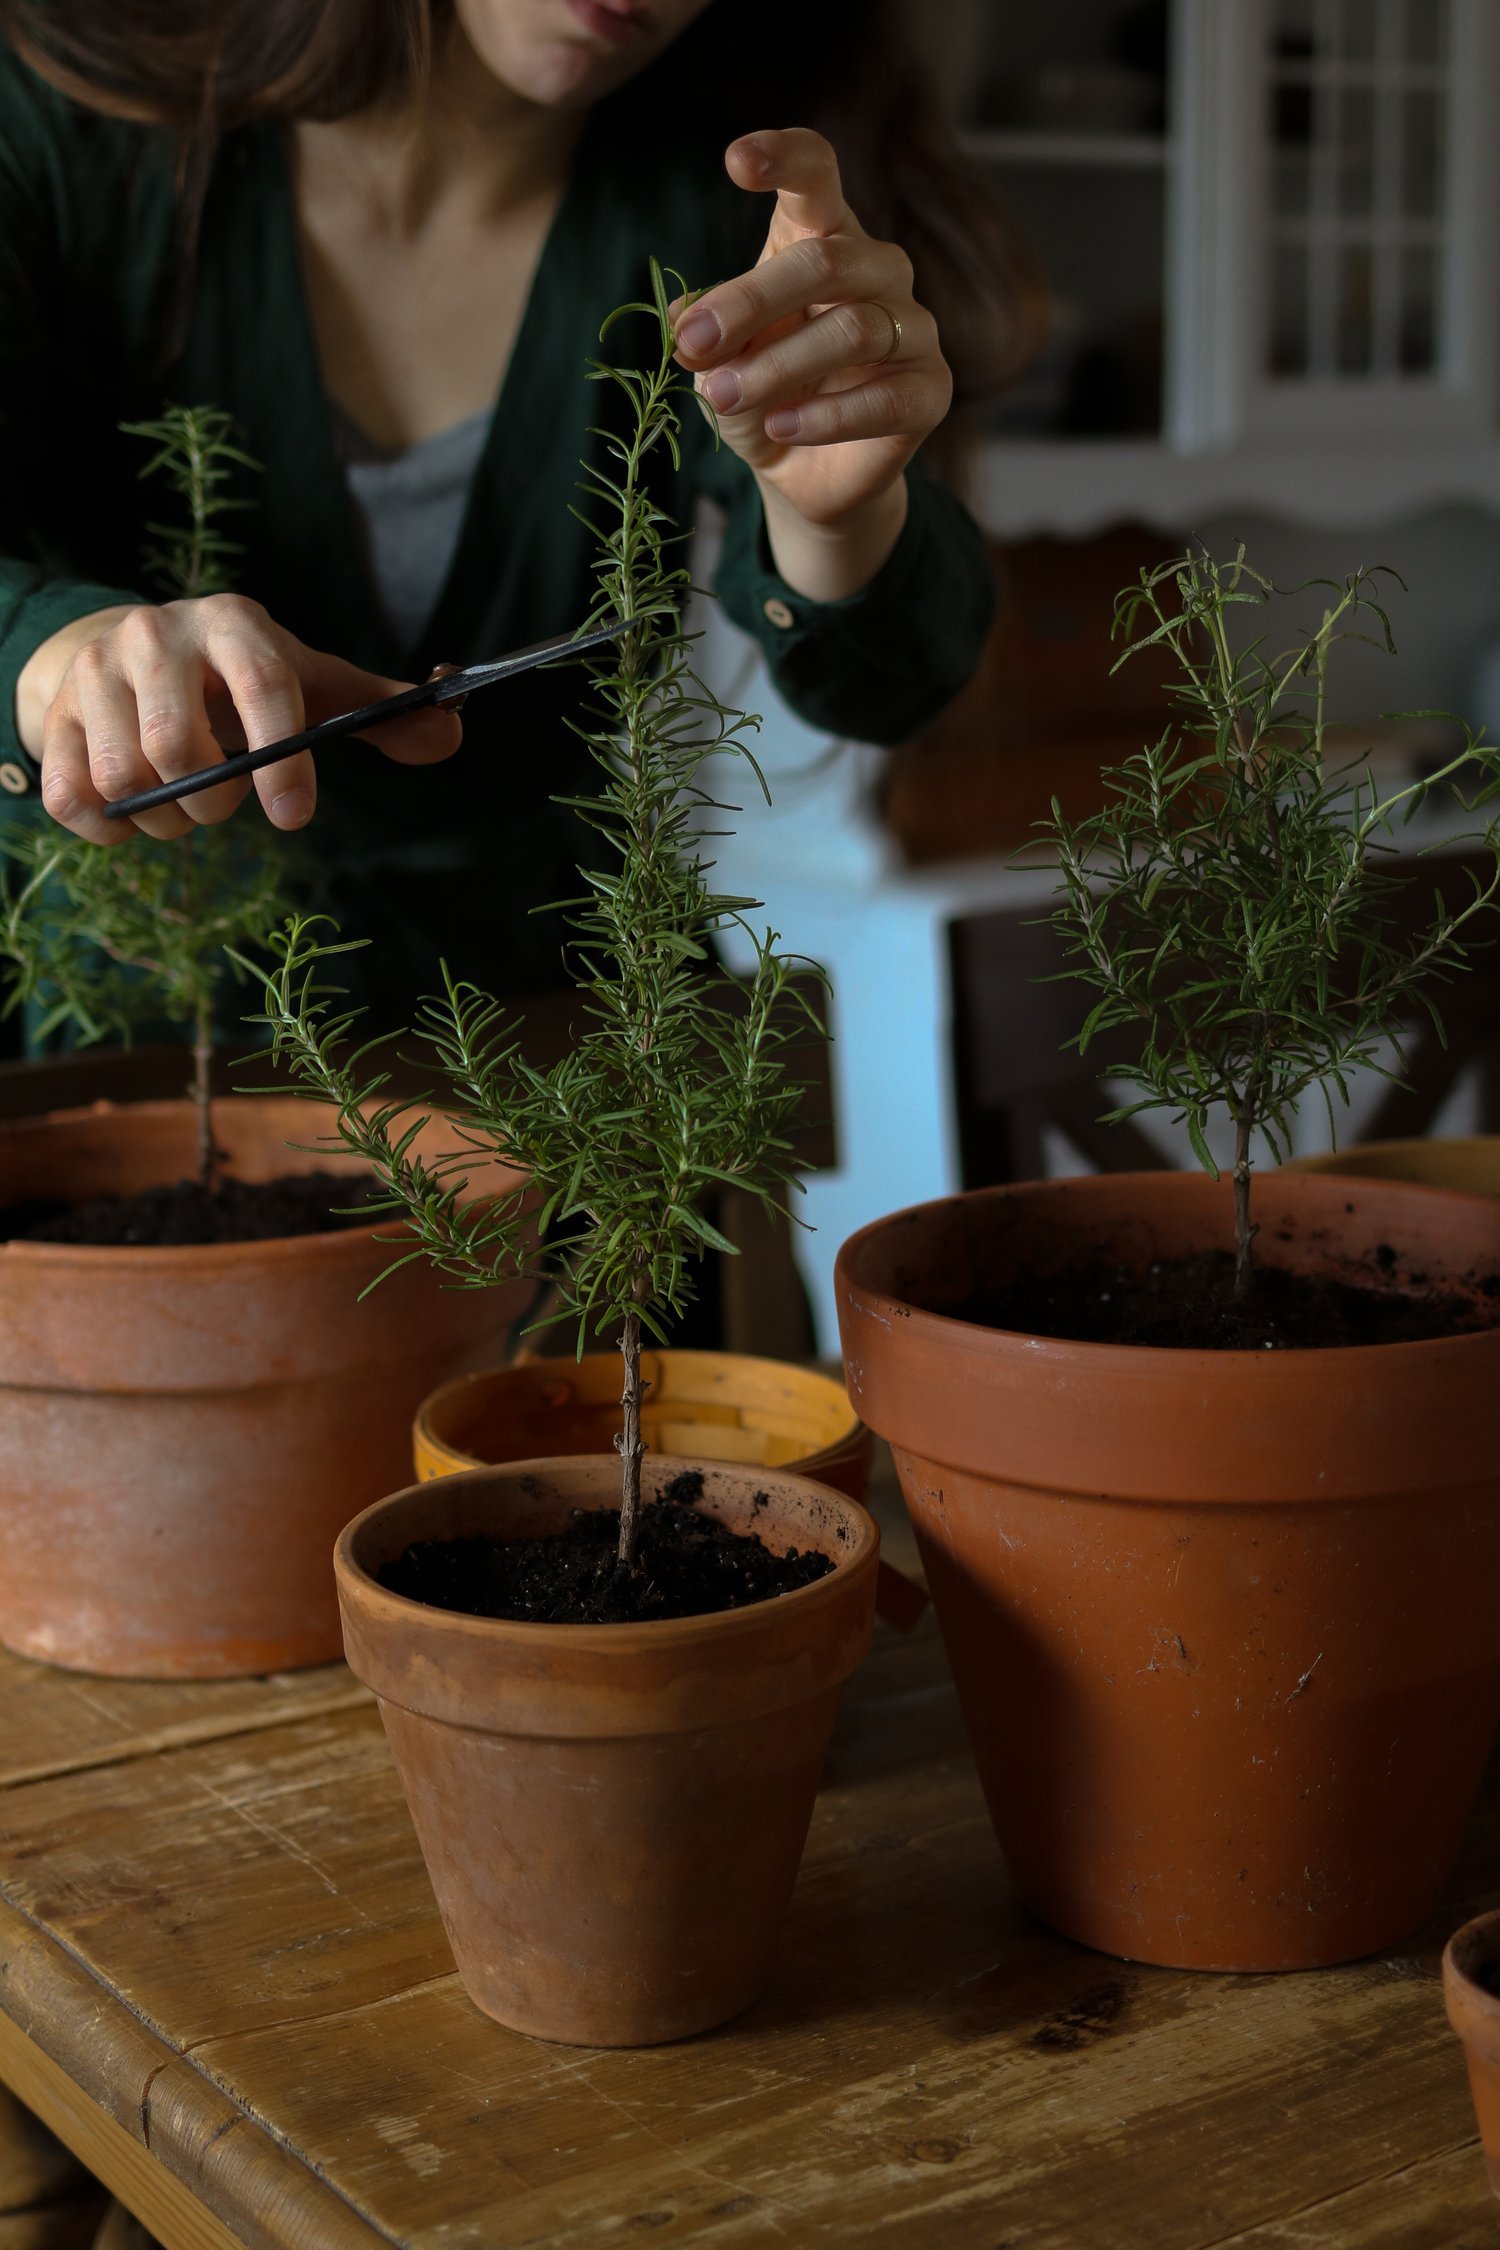 How to Grow Rosemary